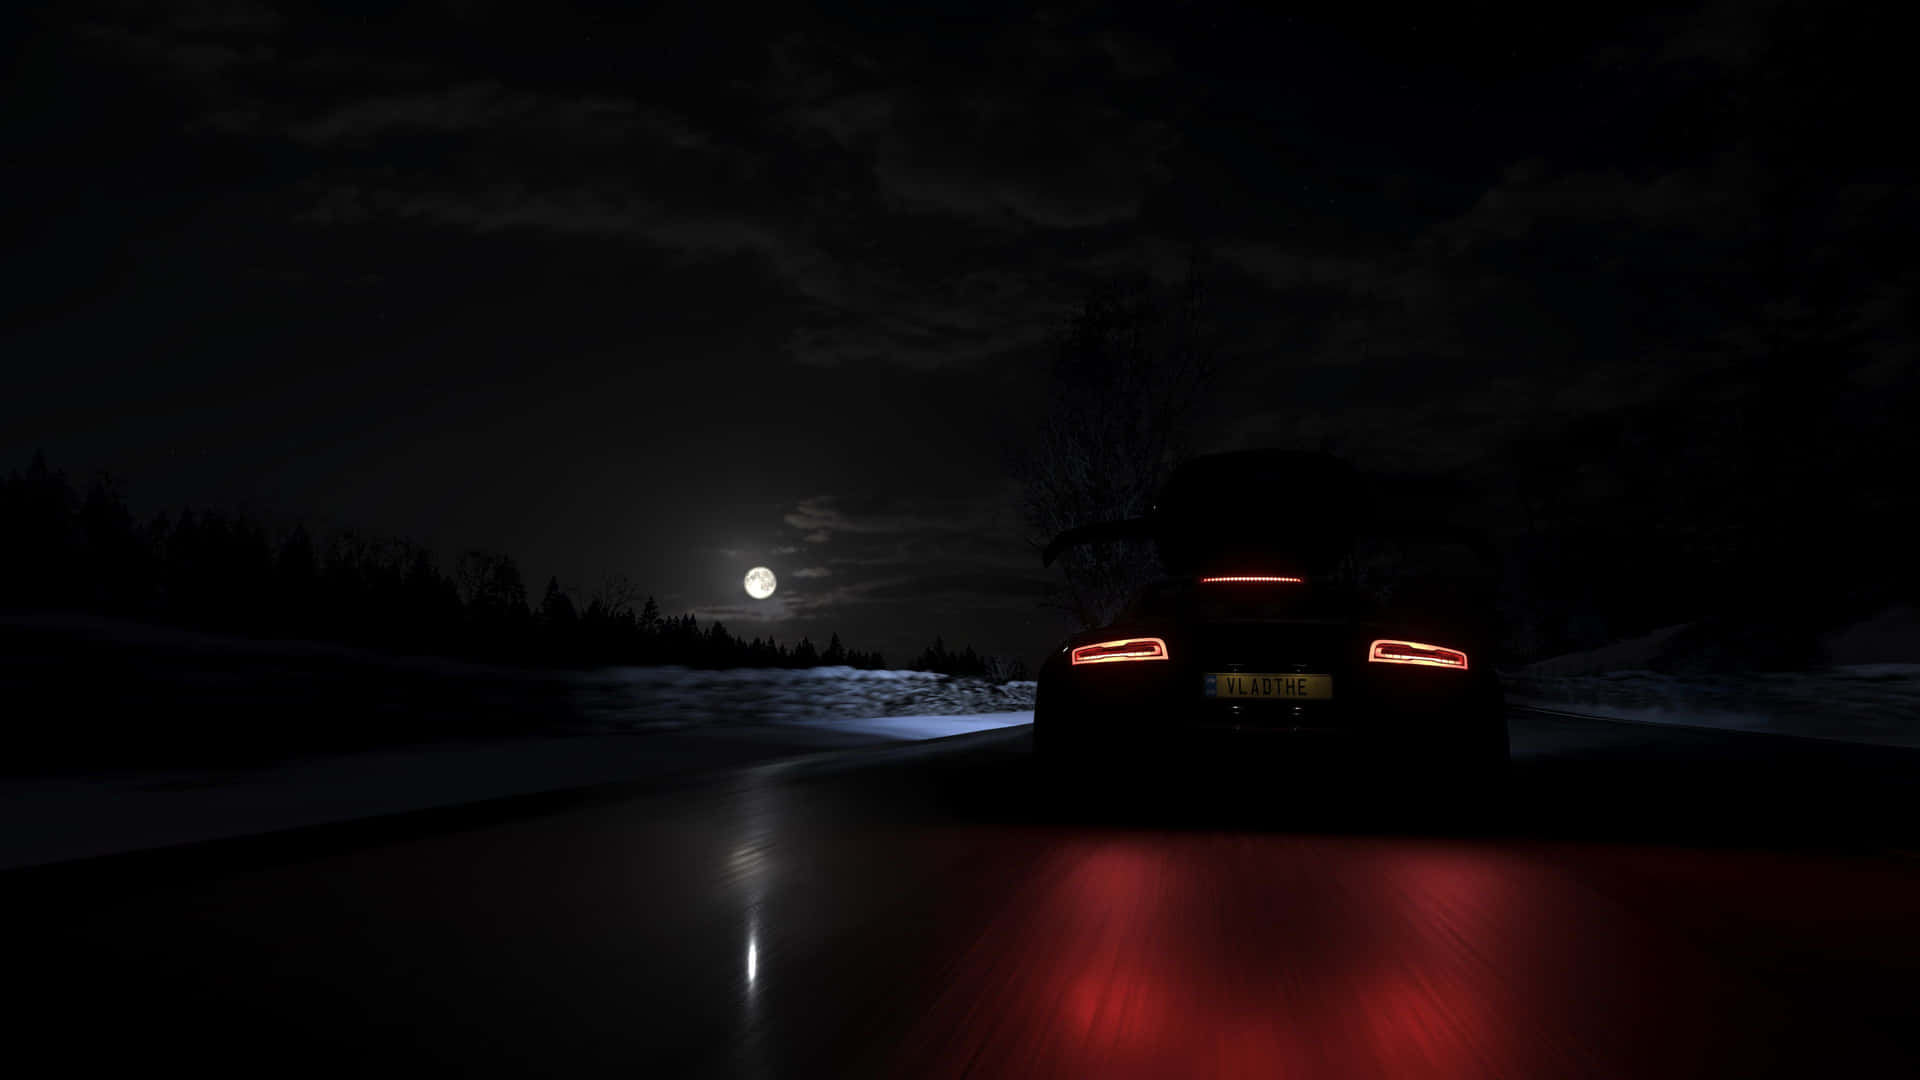 4k Forza Horizon 4 Background Black Car At Night Wallpaper